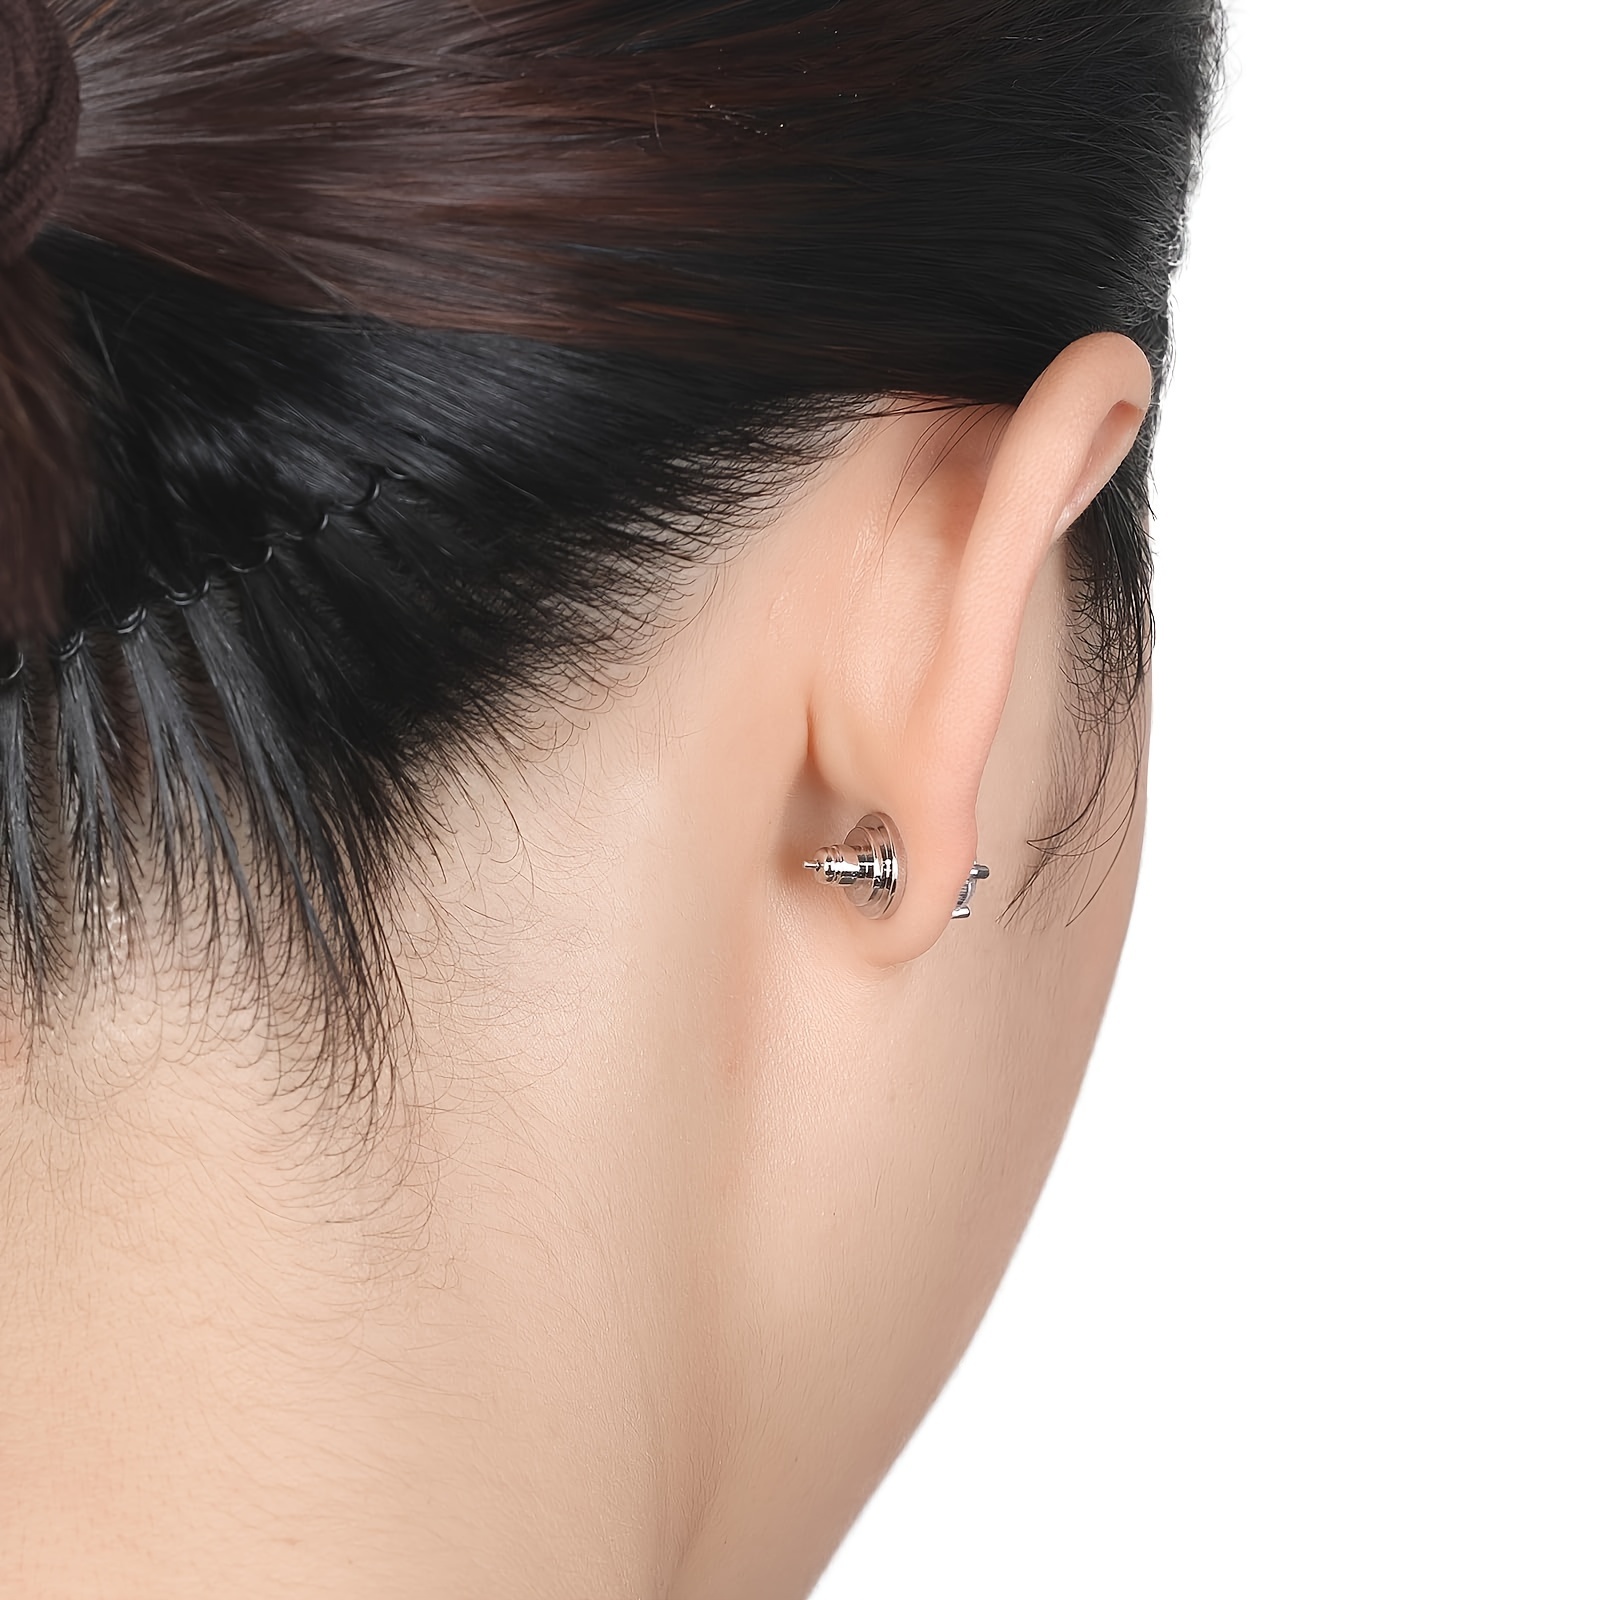 OOKWE Personalized Earring Backs for Droopy Ear Earring Lifters